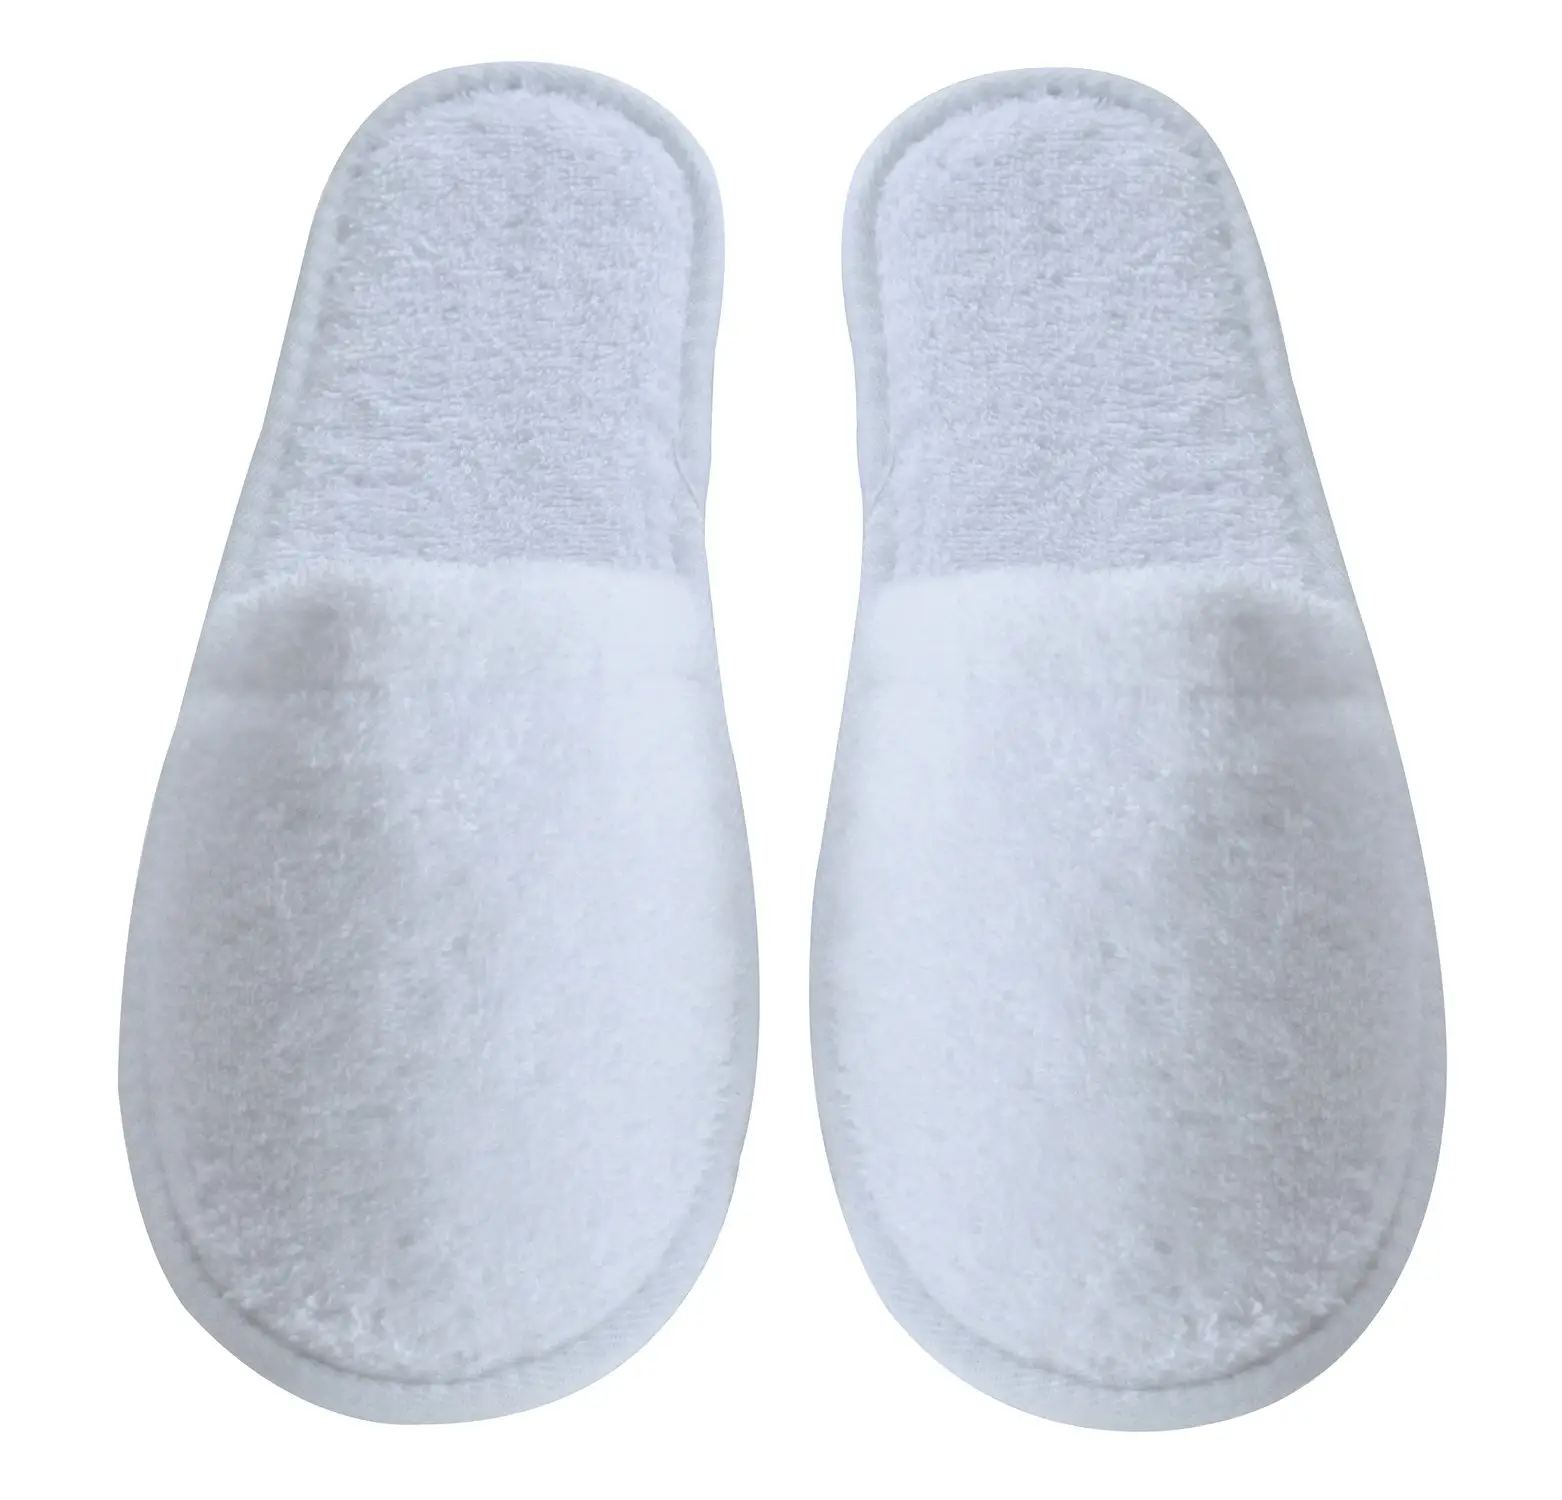 Personalizado hotel_disposable_slippers dedo do pé fechado branco terry hotel chinelos para adultos